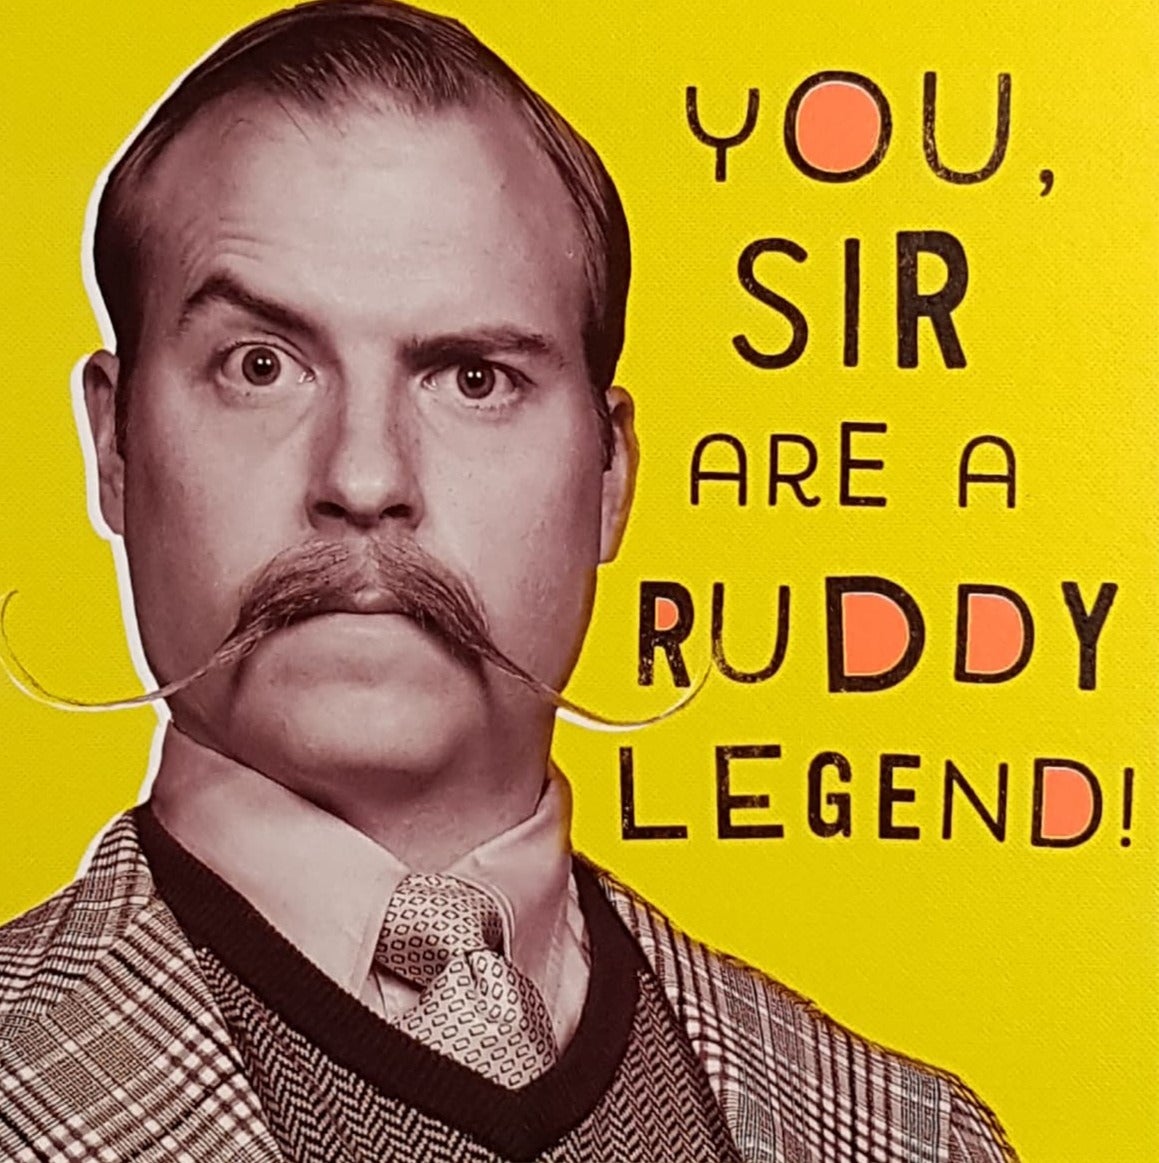 Birthday Card - General Humour / A Man With A Moustache Raising An Eyebrow